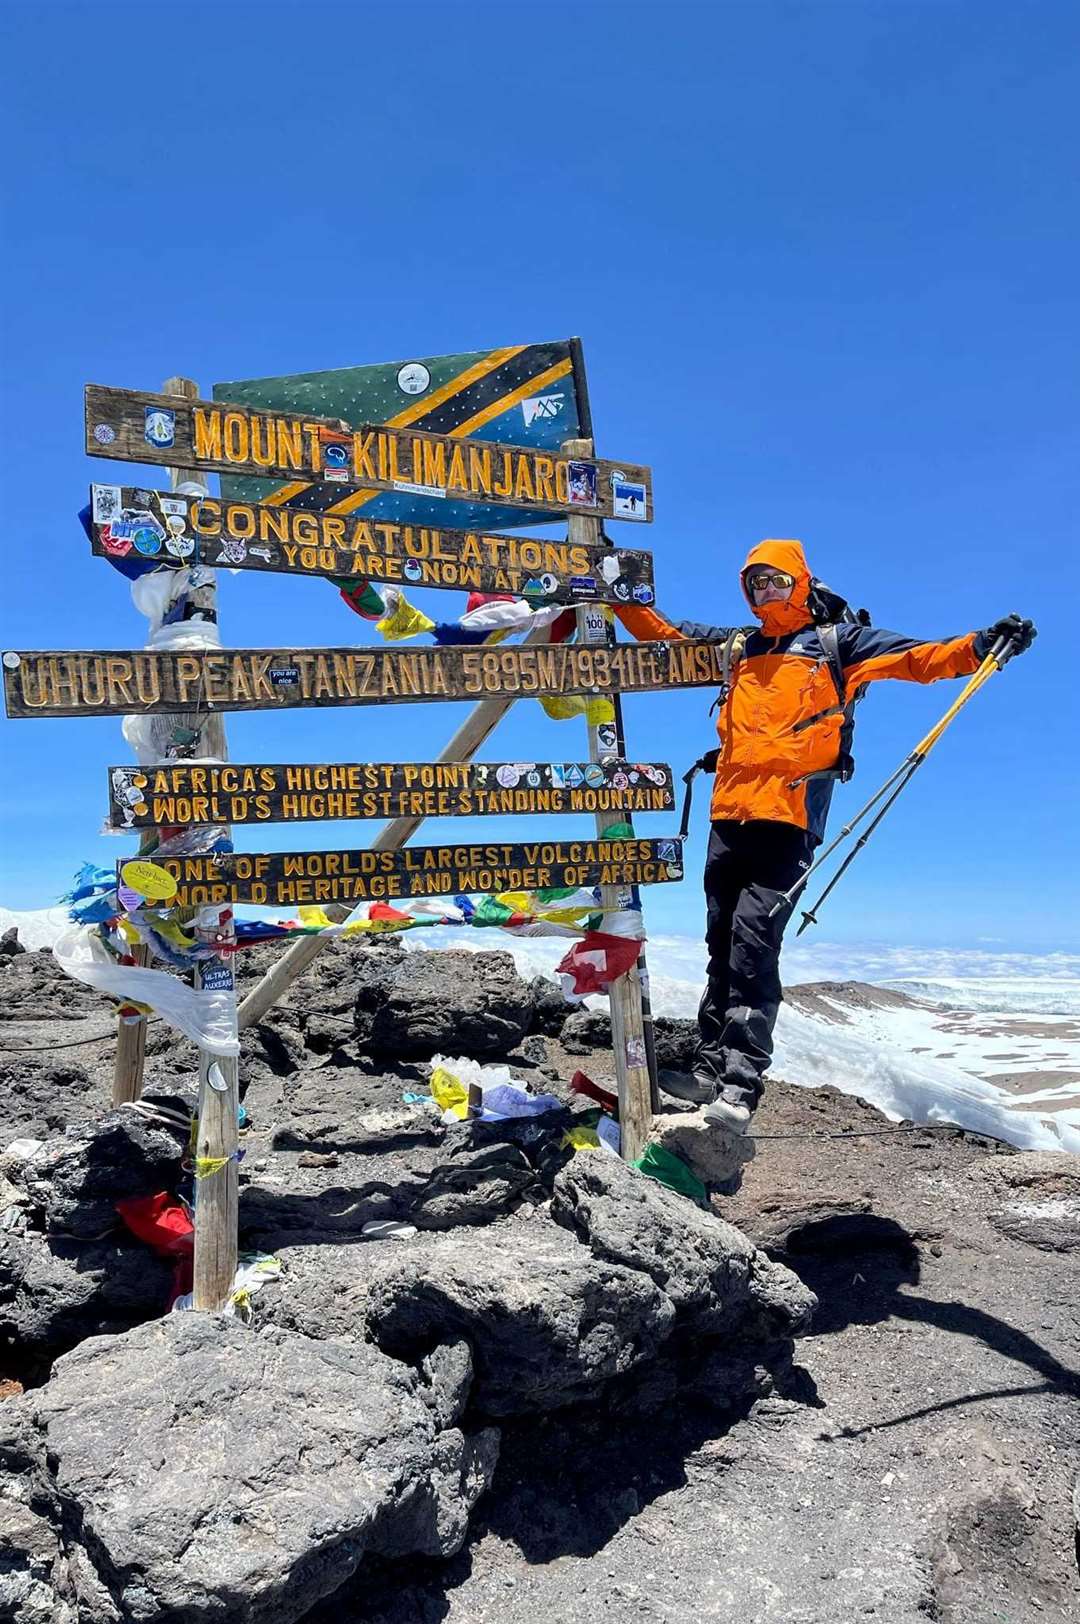 Paul at Mount Kilimanjaro.